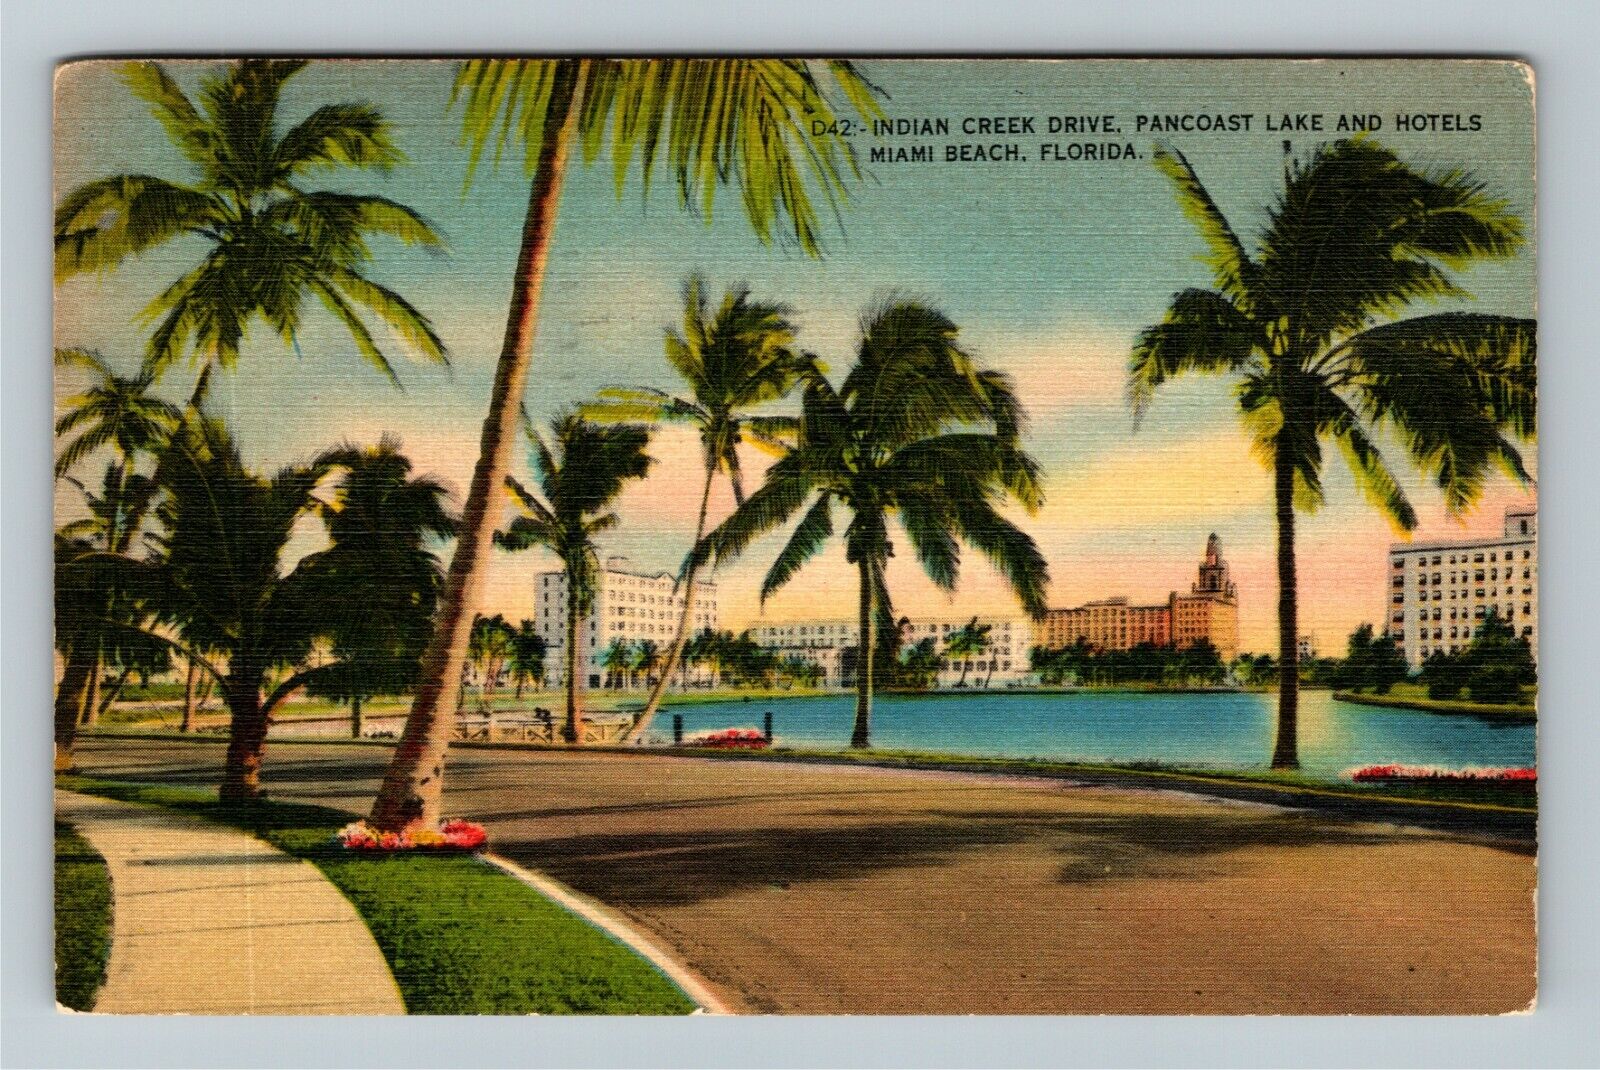 Miami, FL-Florida, Pancoast Lake, Waterfront Hotels, c1940 Vintage Postcard